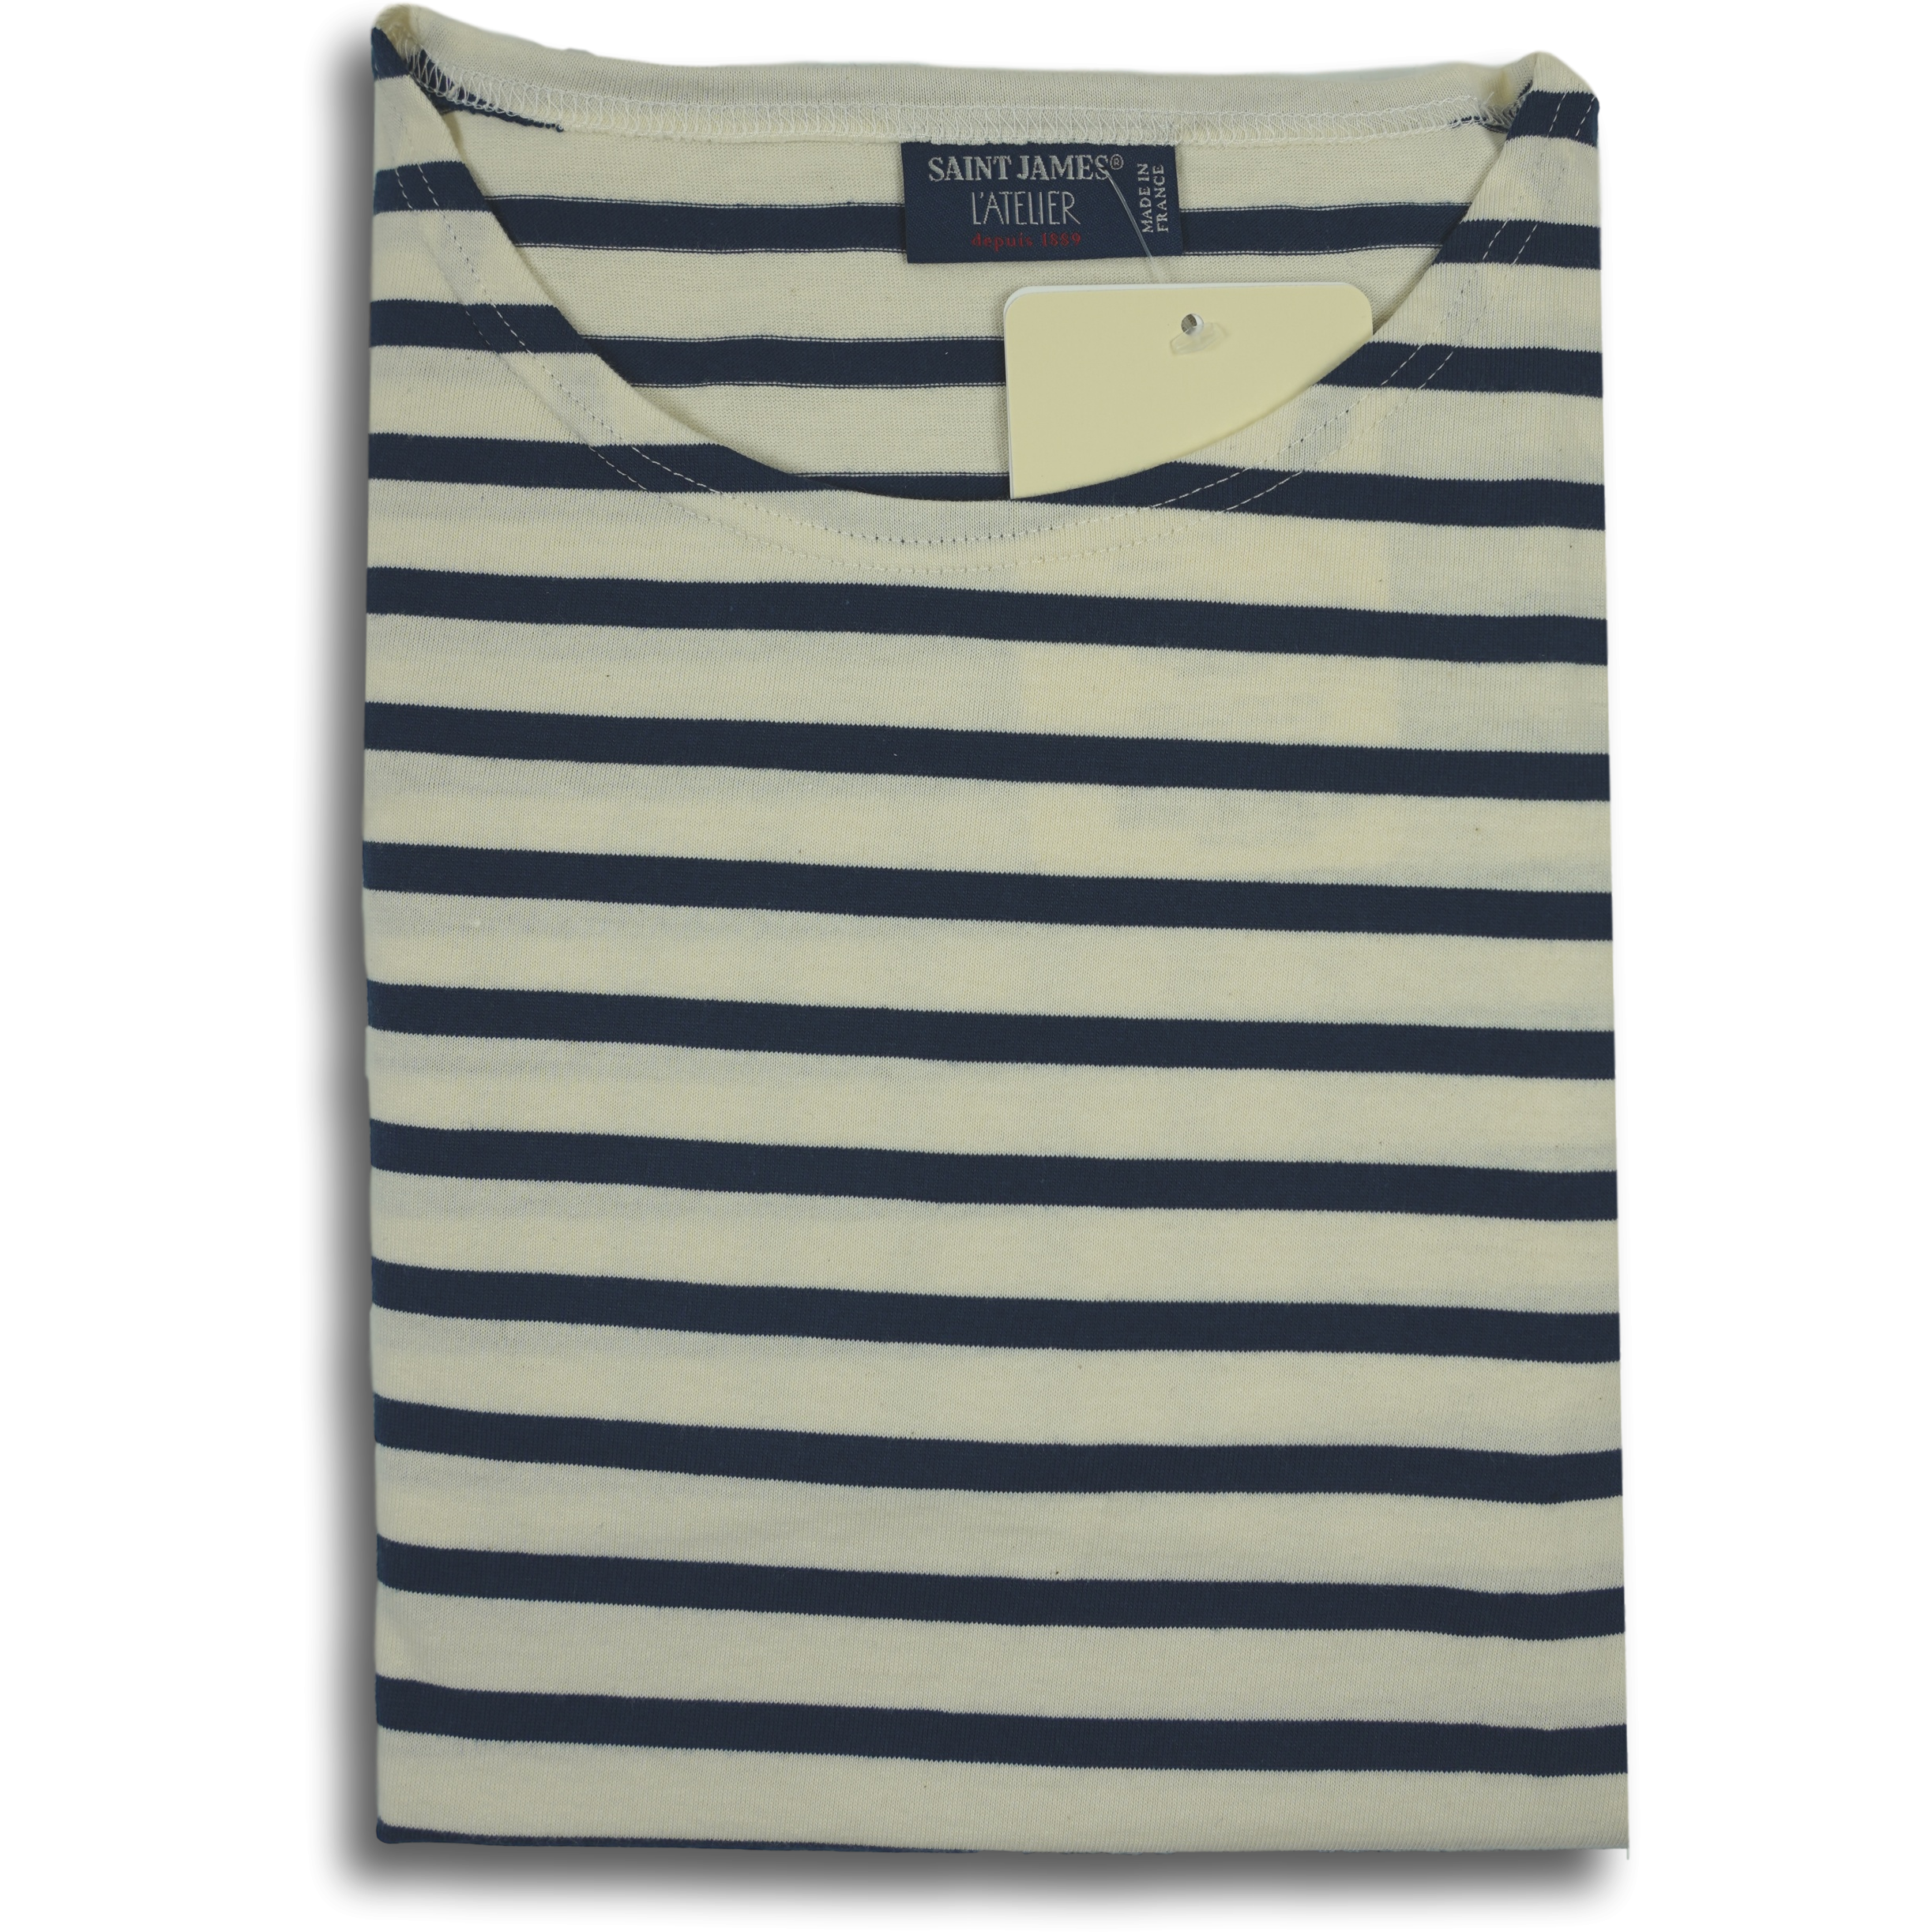 Minquidame Striped Shirt